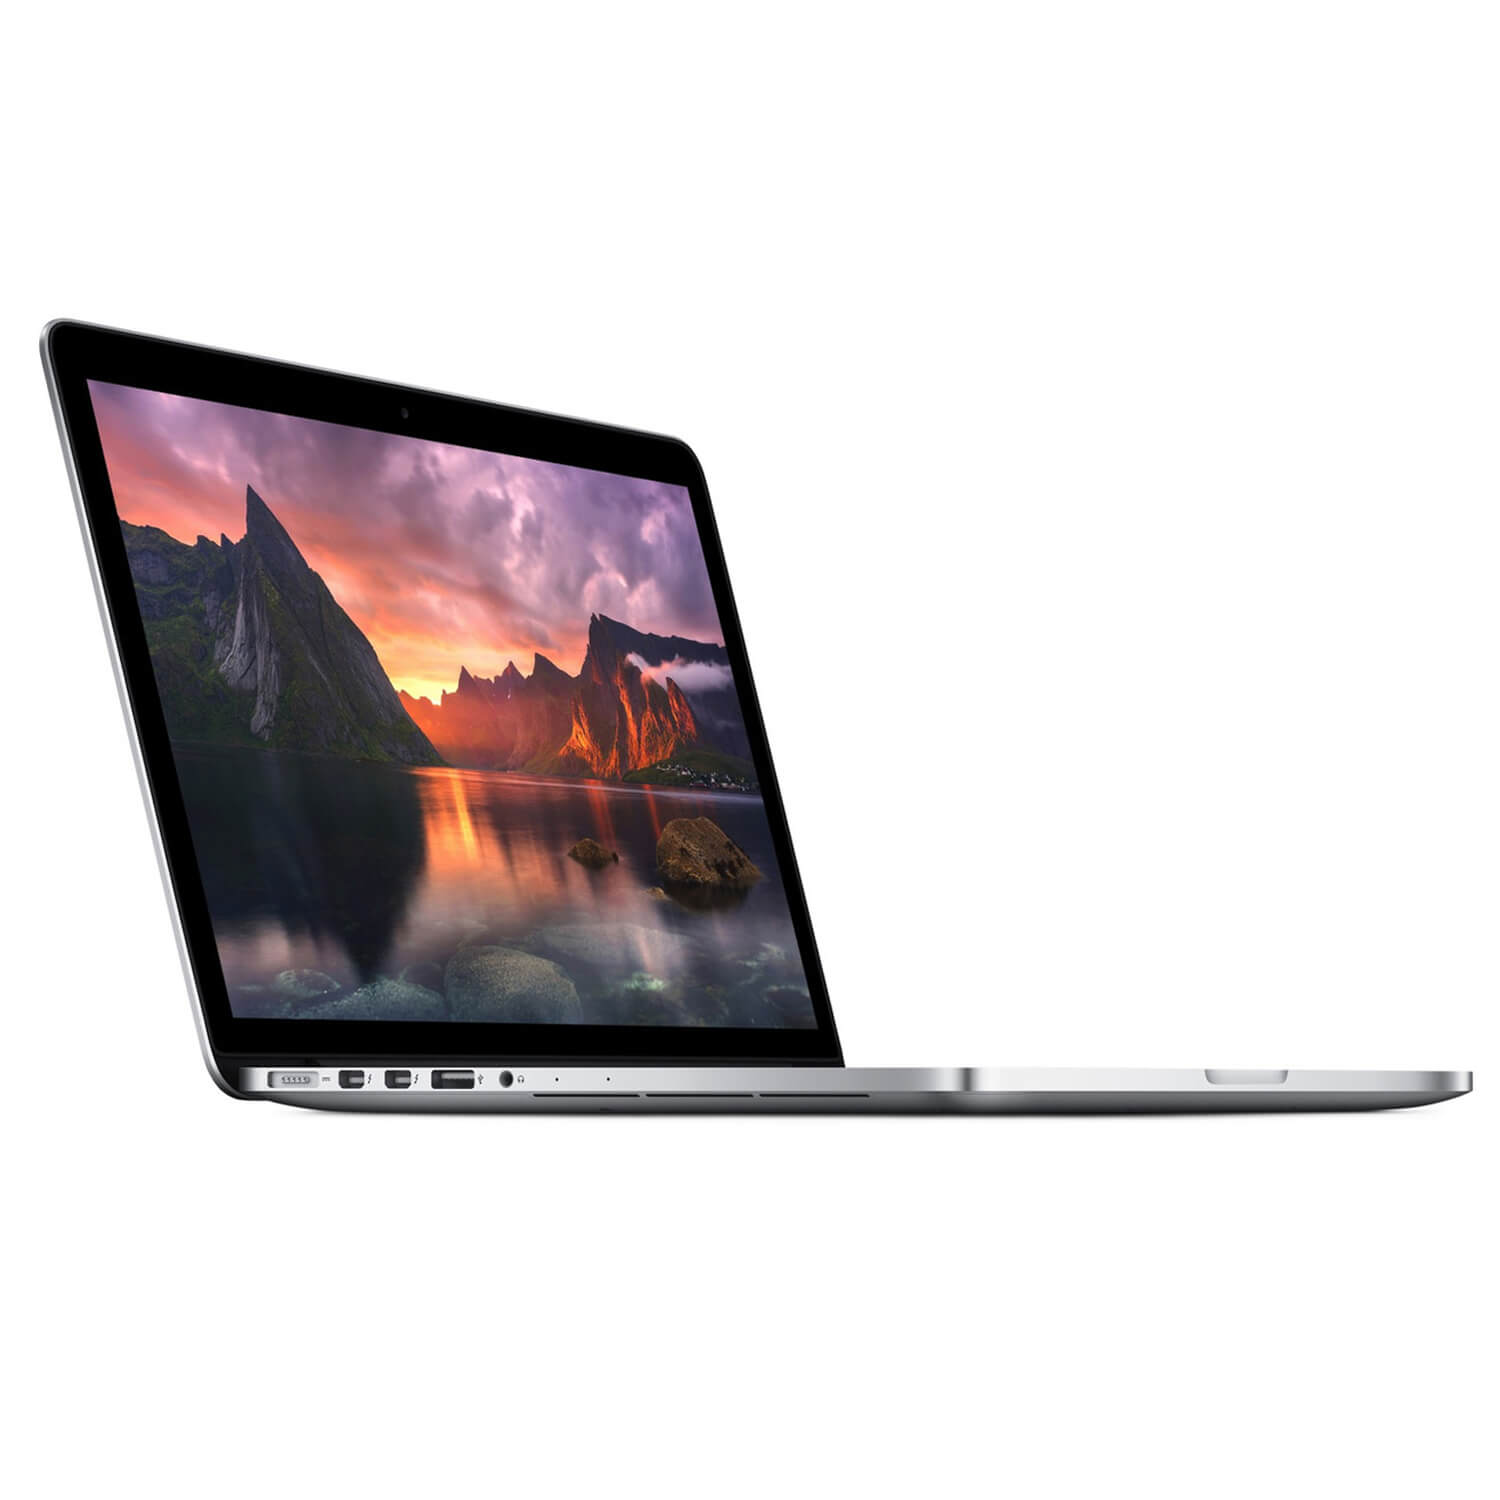 Refurbished MacBook Pro 15 inch iUsed